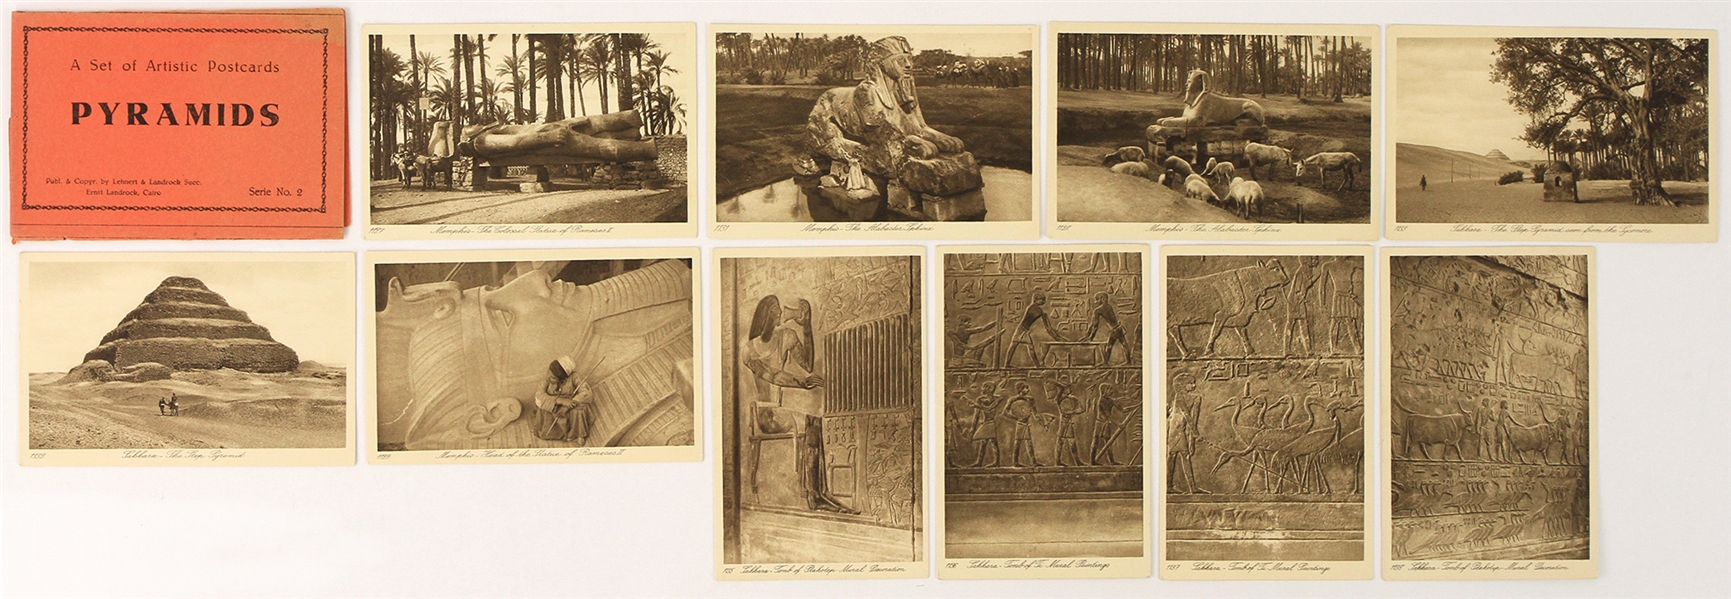 1920s Lehnert & Landrock Artistic Egyptian Pyramid 3.5" x 5.5" Postcards - Lot of 10 w/ Original Cover